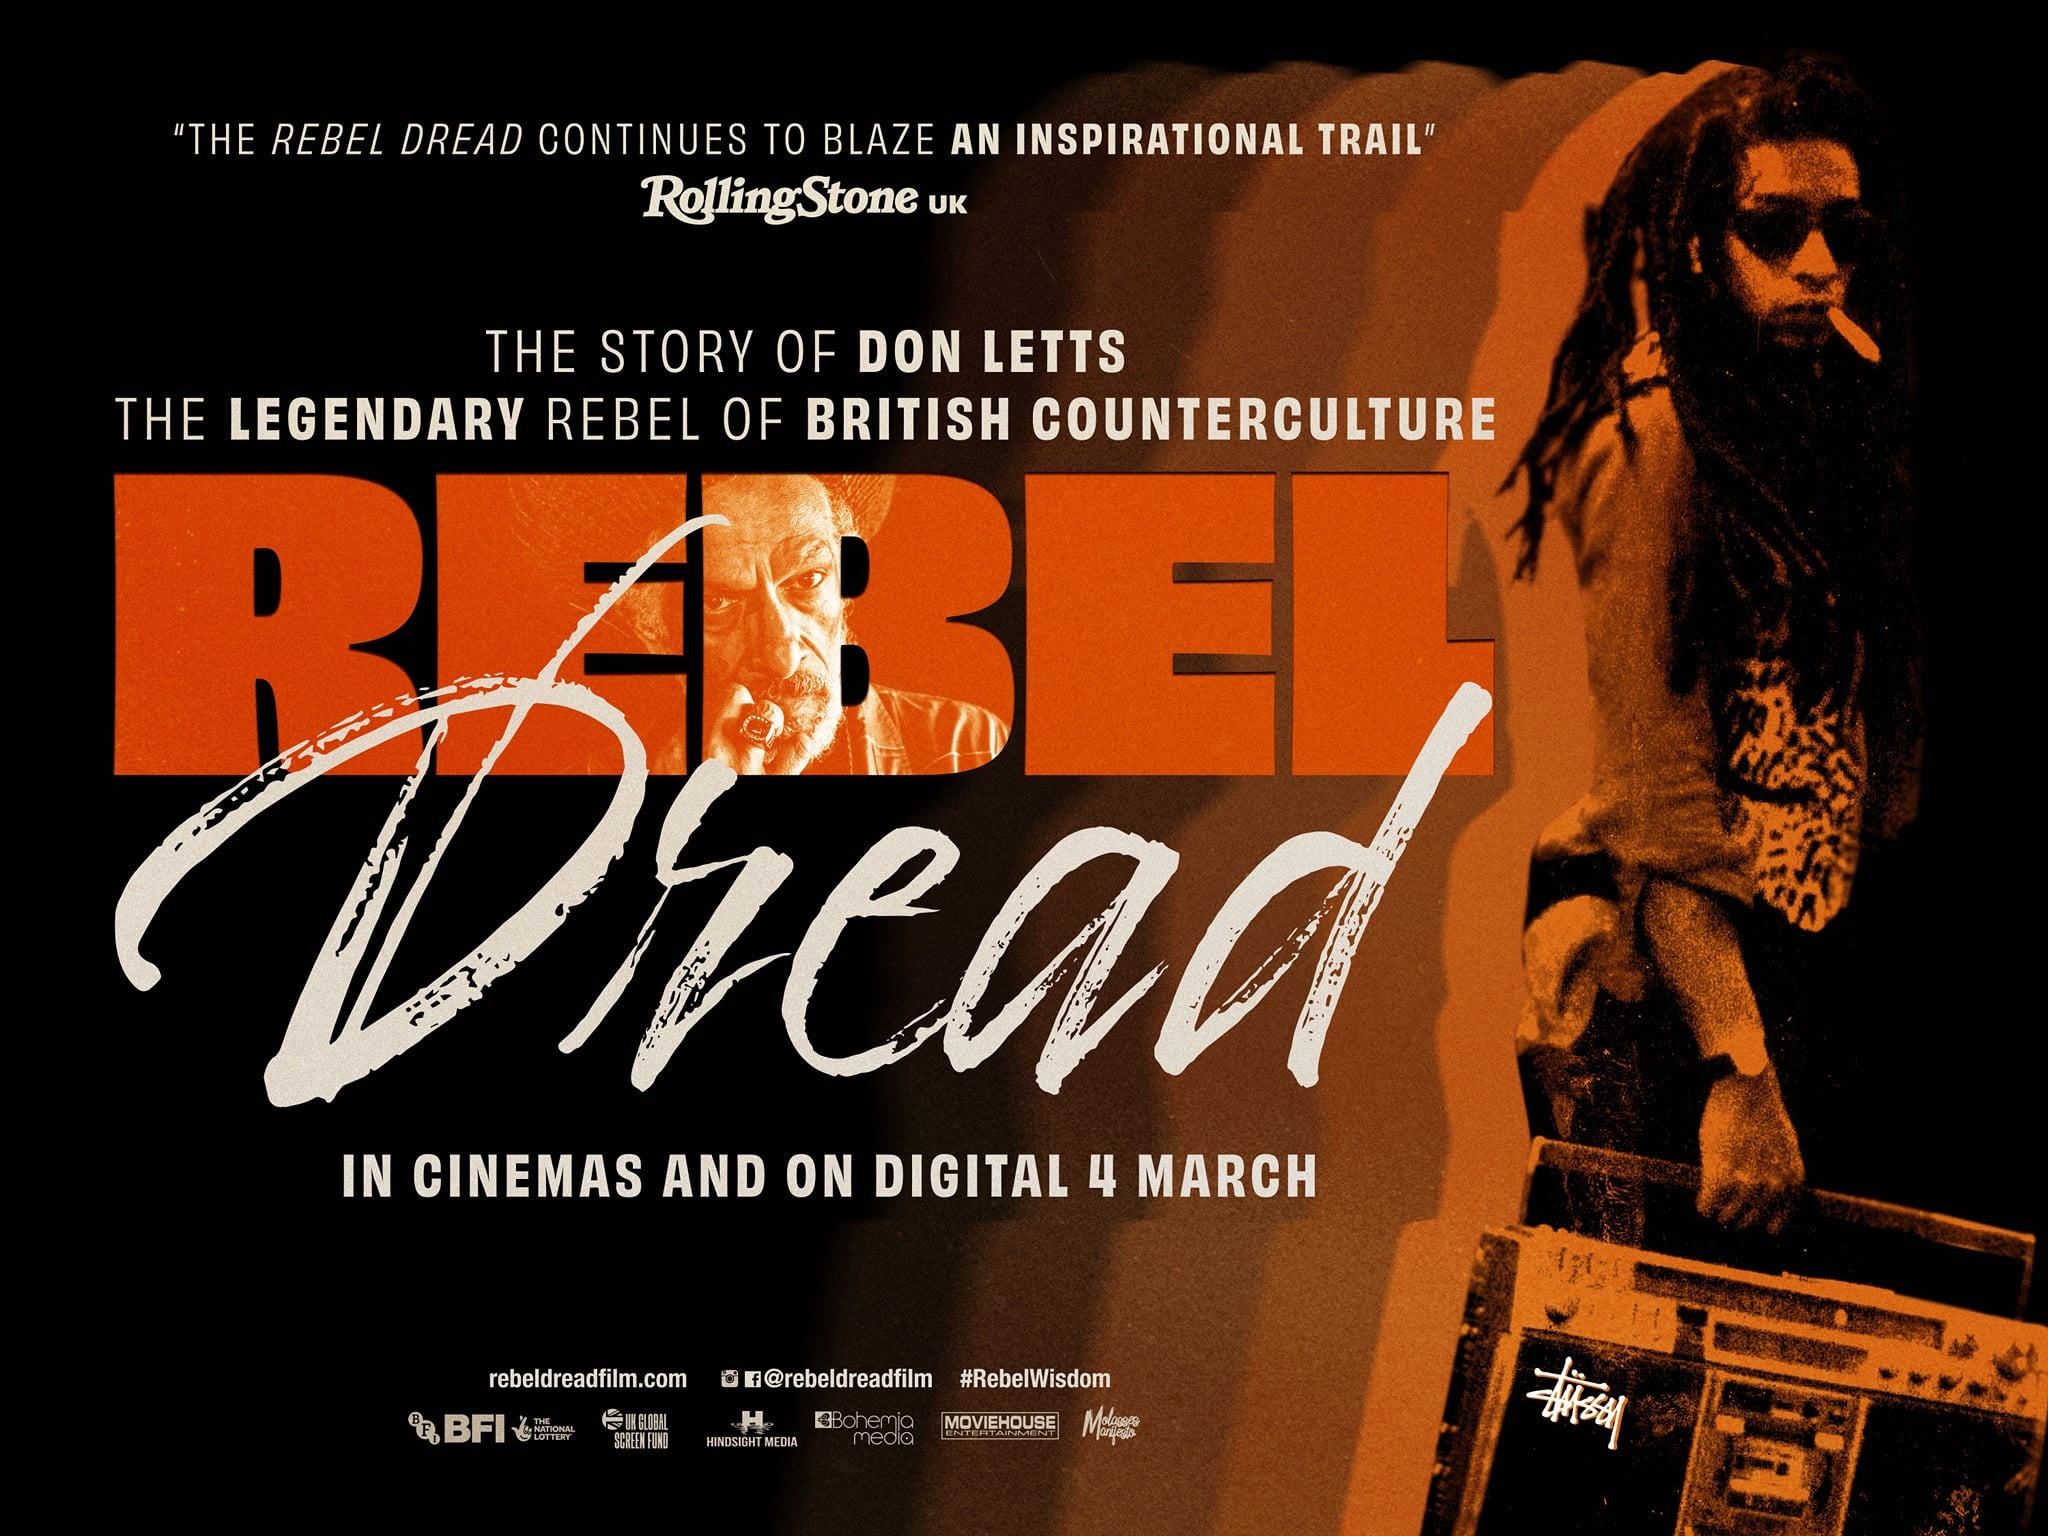 Mega Sized Movie Poster Image for Rebel Dread 